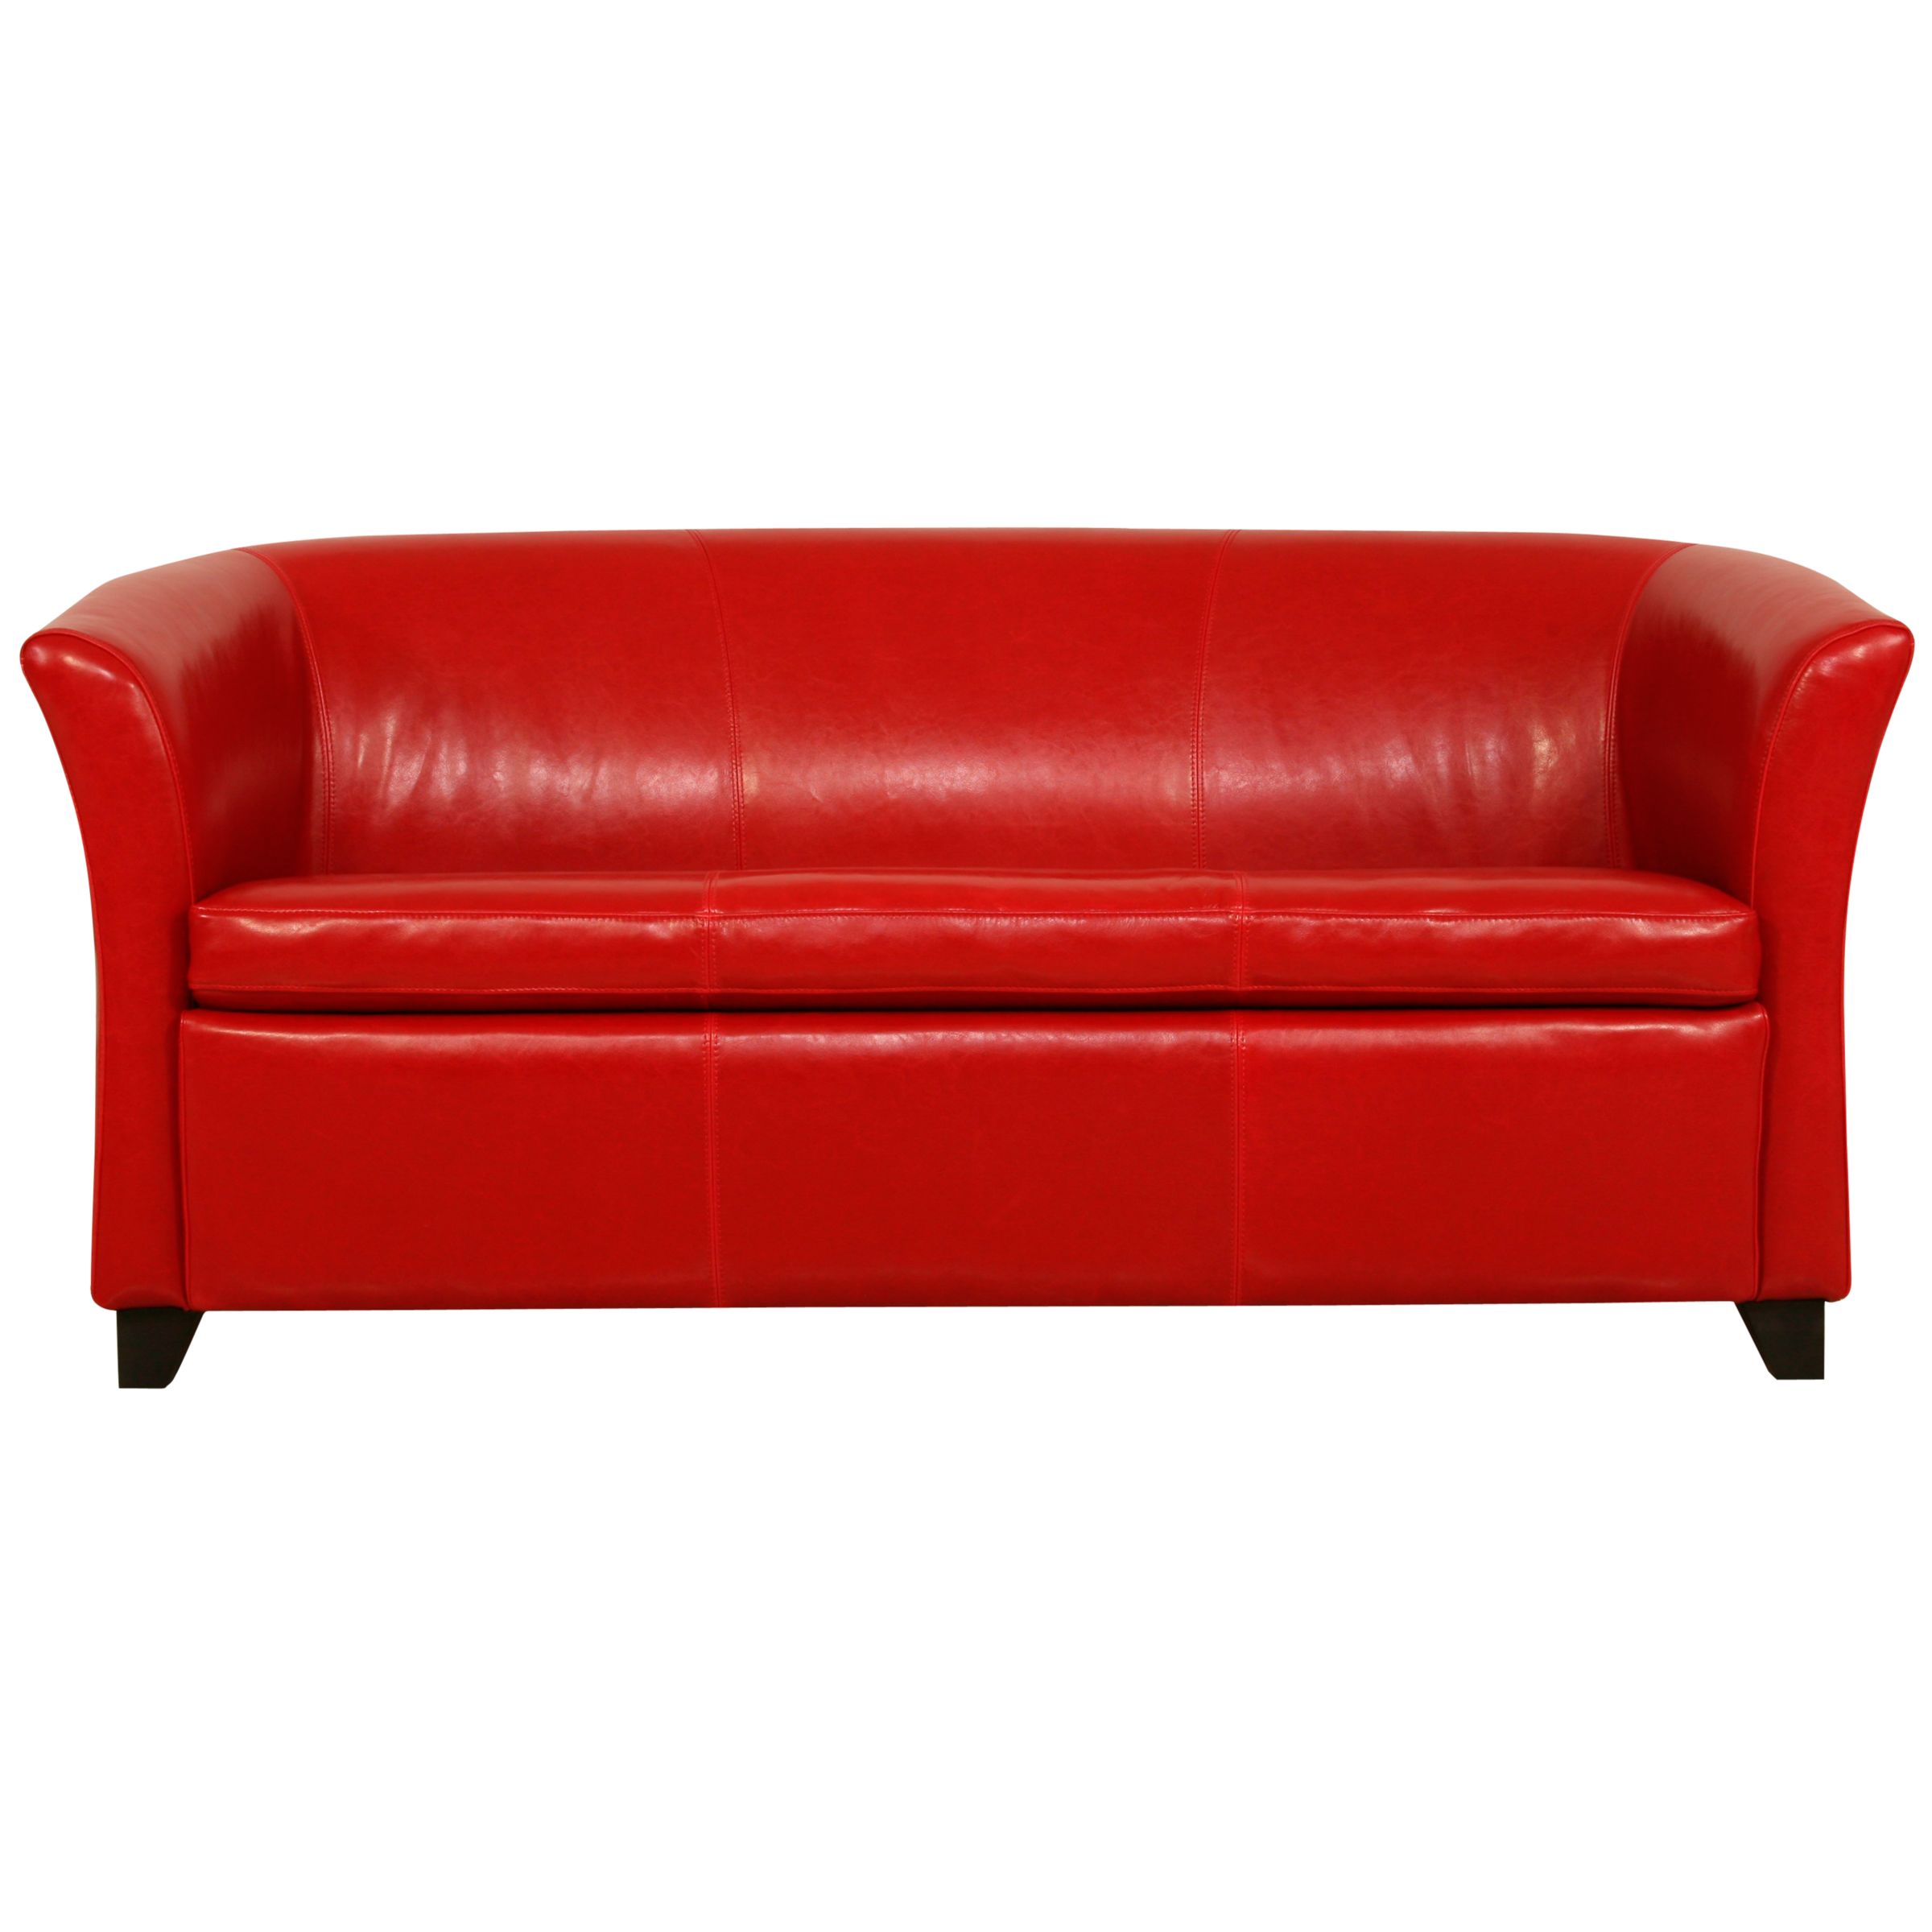 John Lewis Romeo Small Leather Sofa, Red at John Lewis